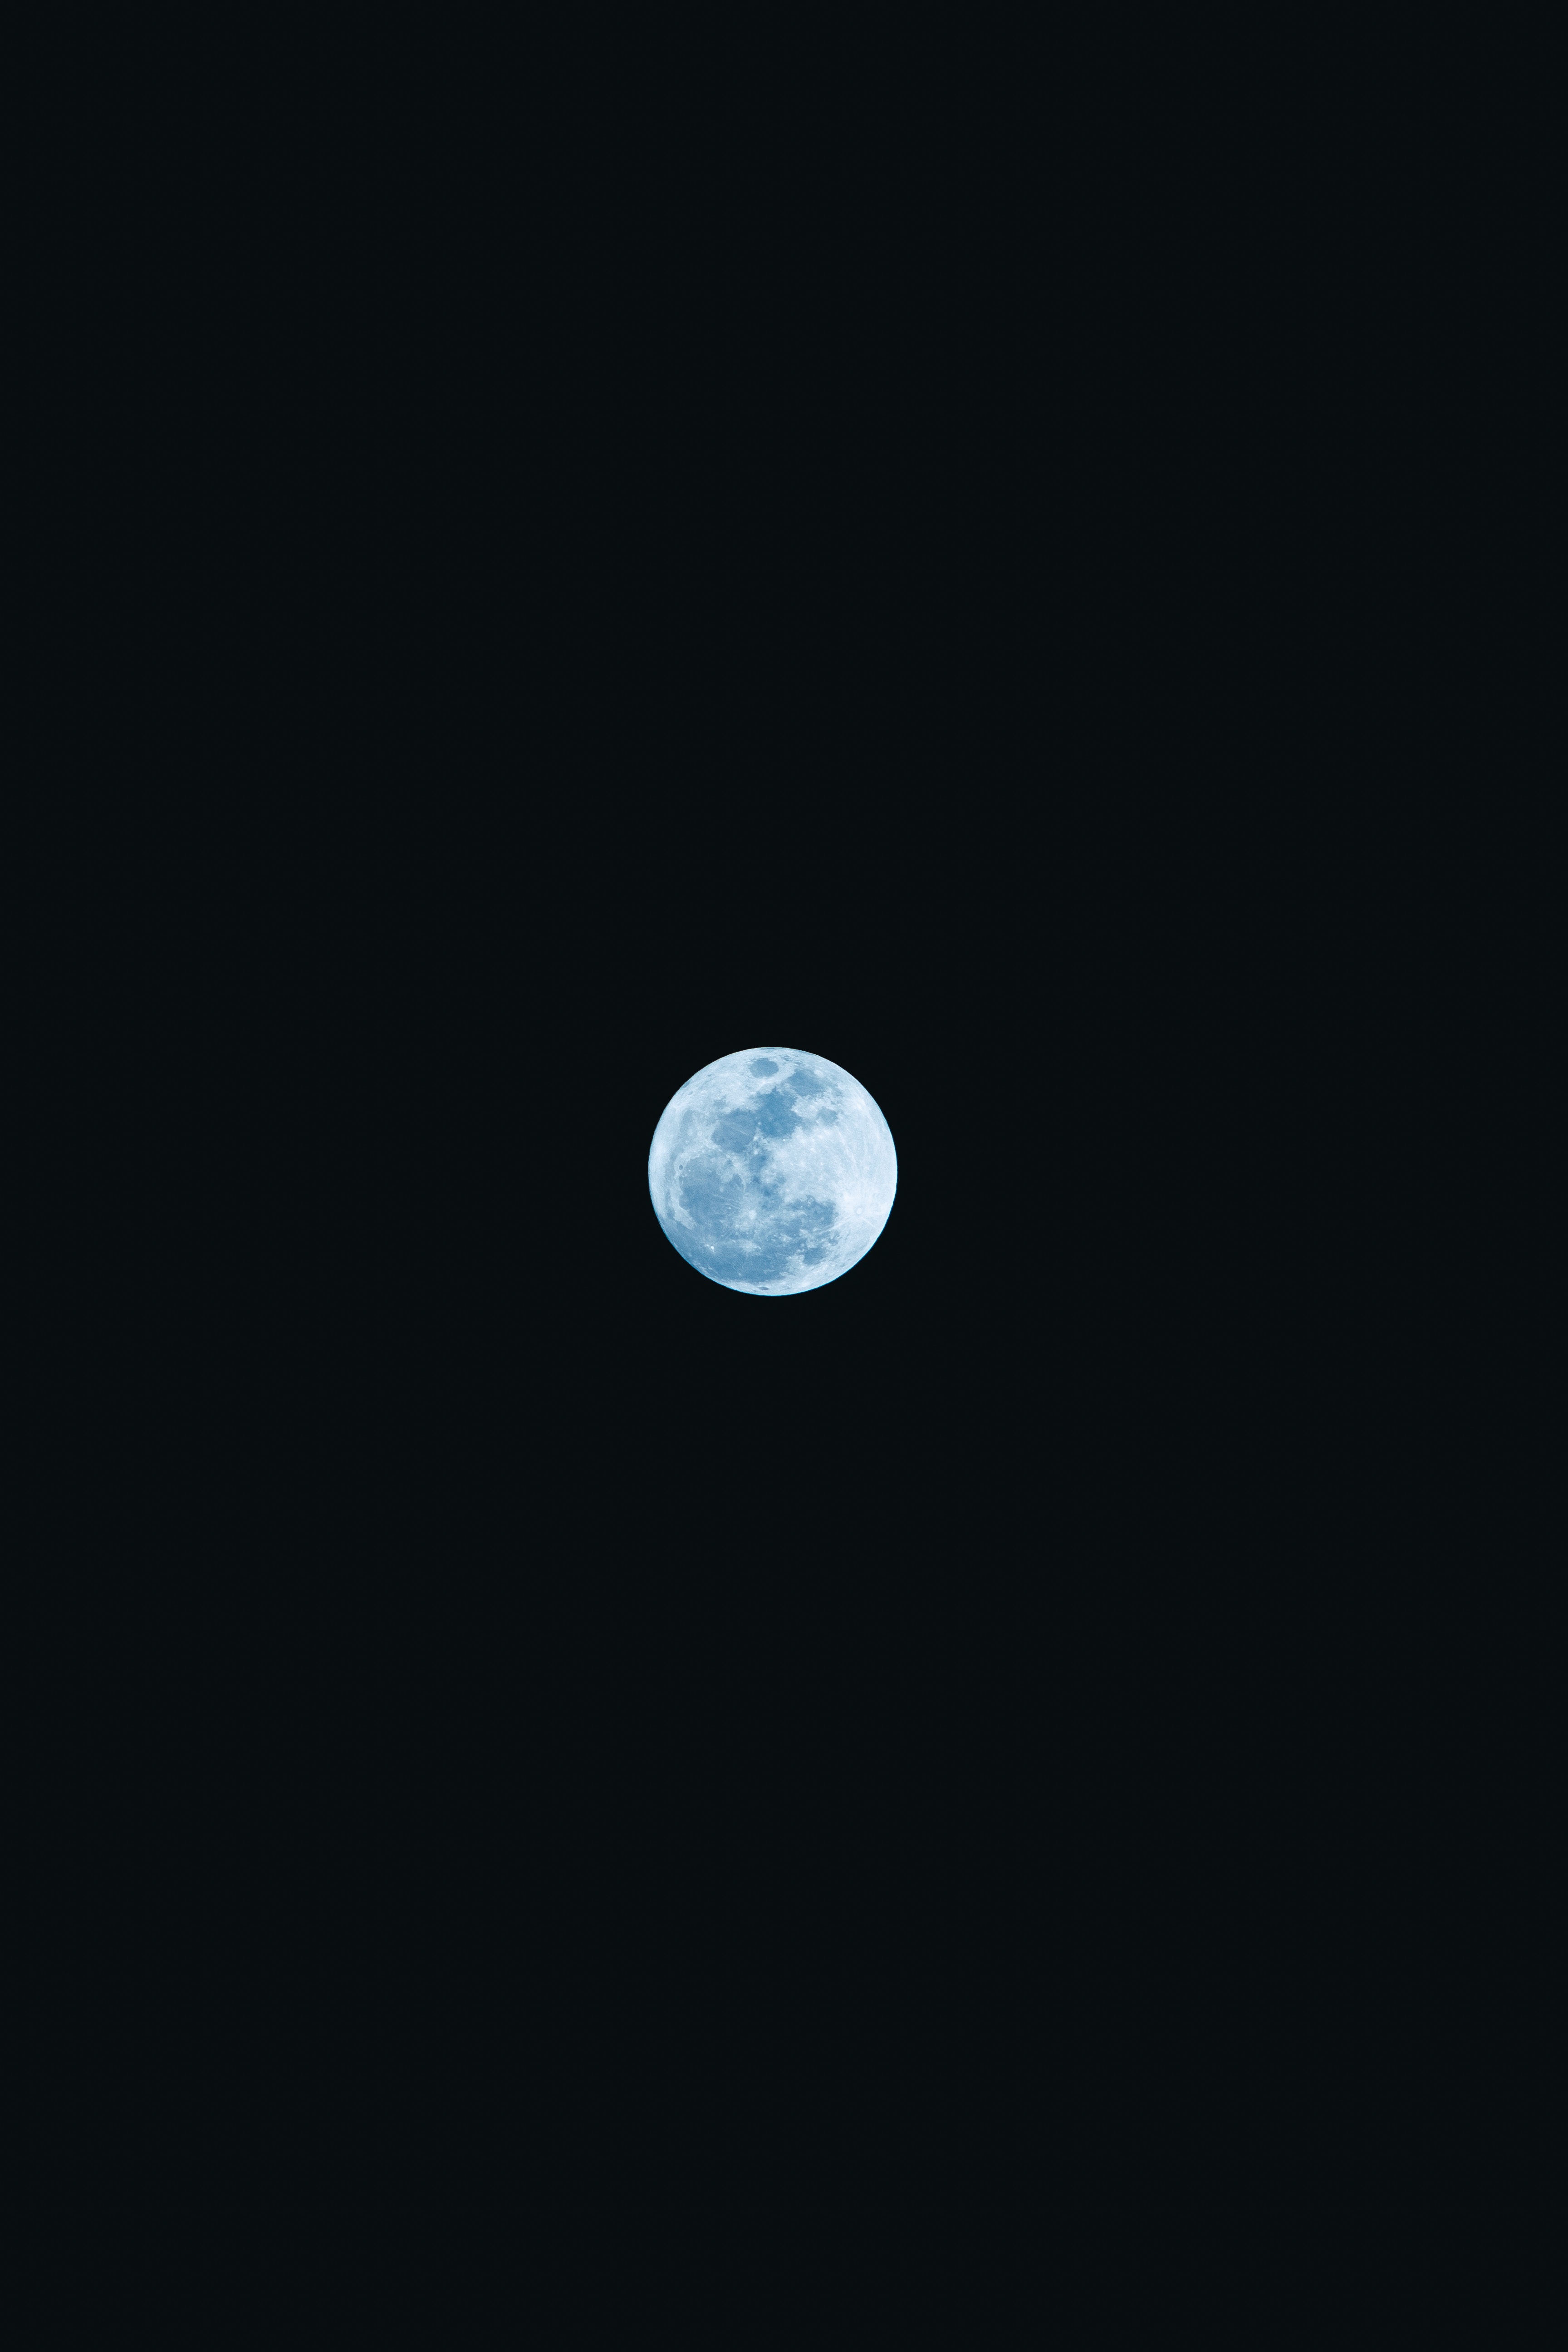 Full Moon in Dark Night Sky · Free